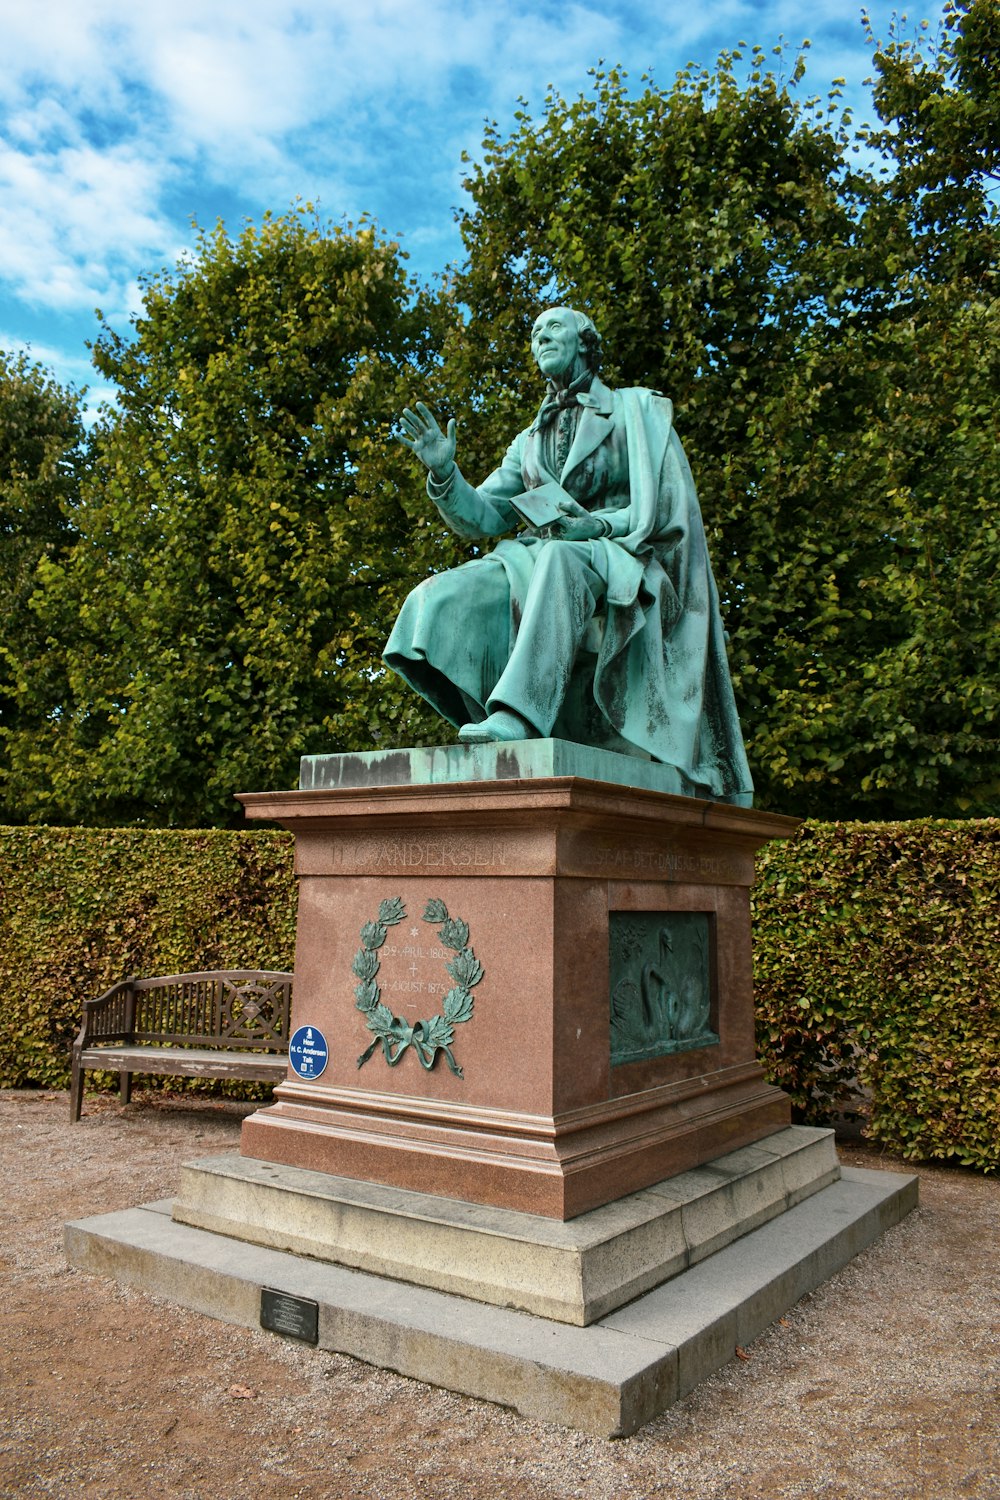 a statue of a person